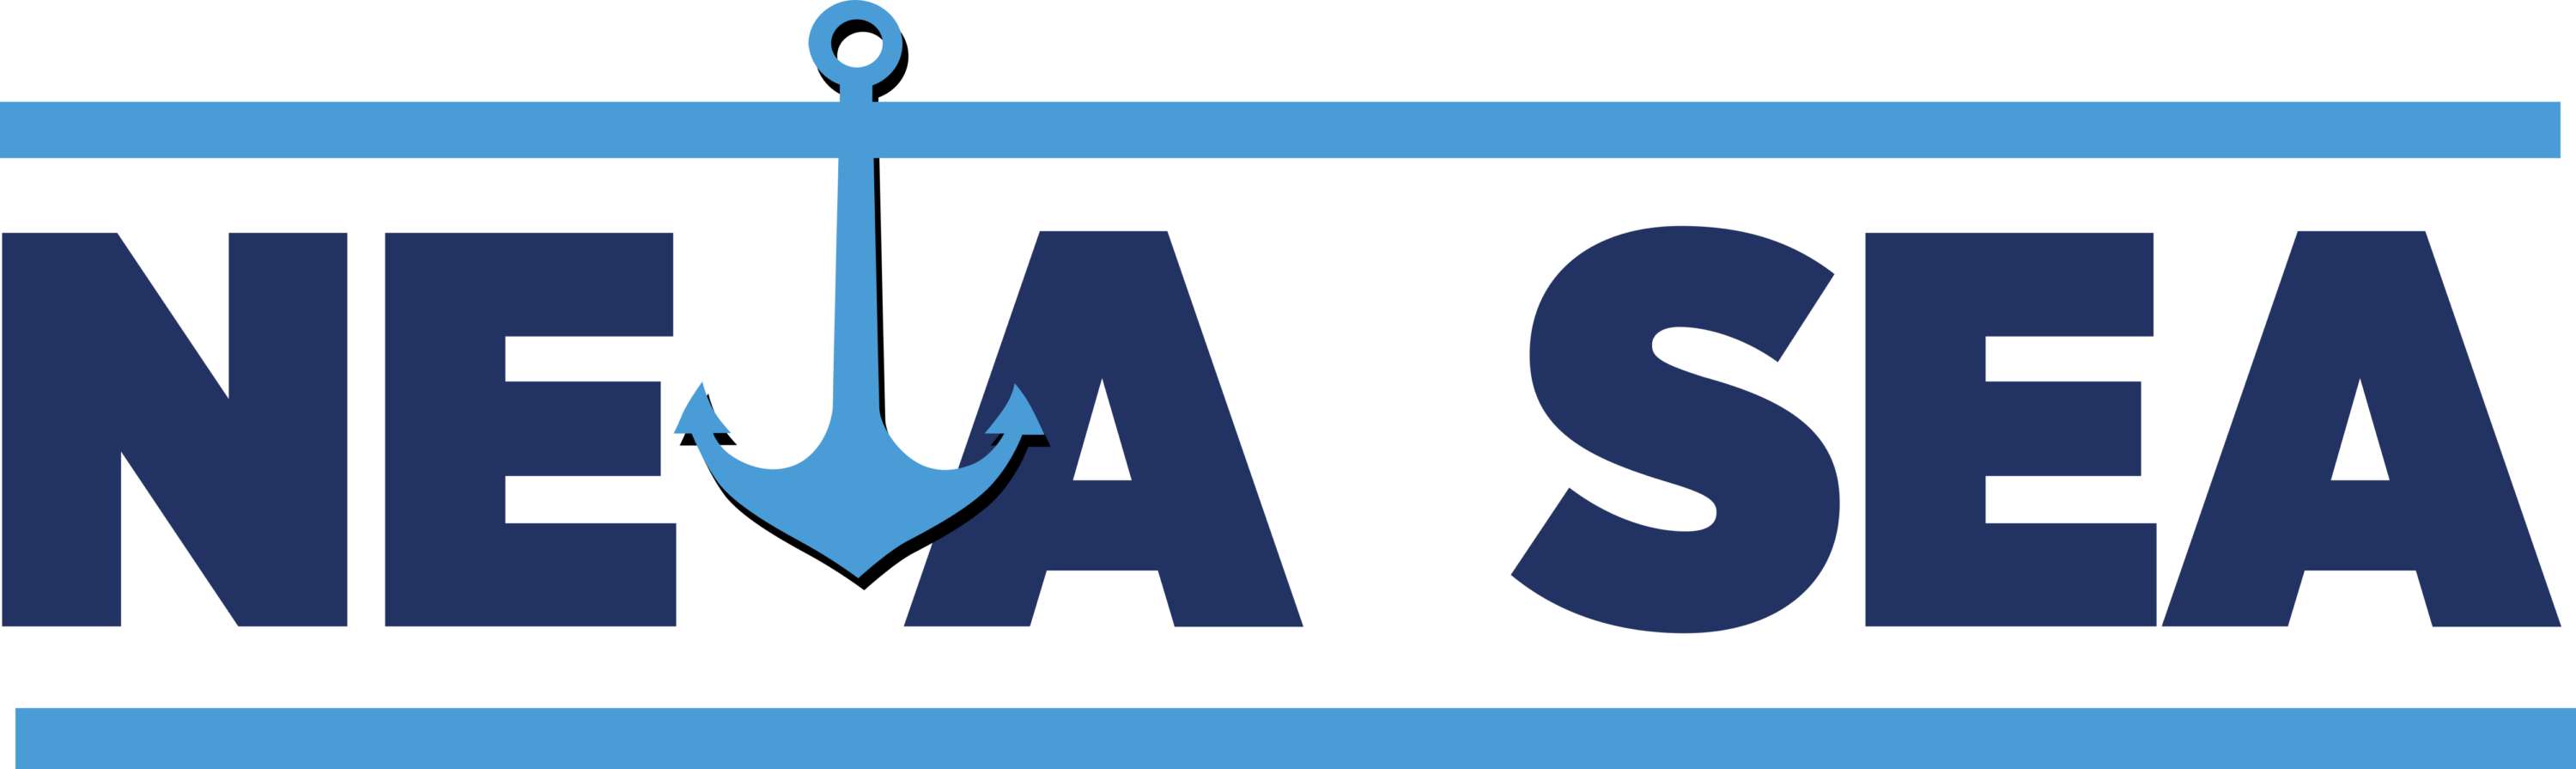 Neta Sea Logo